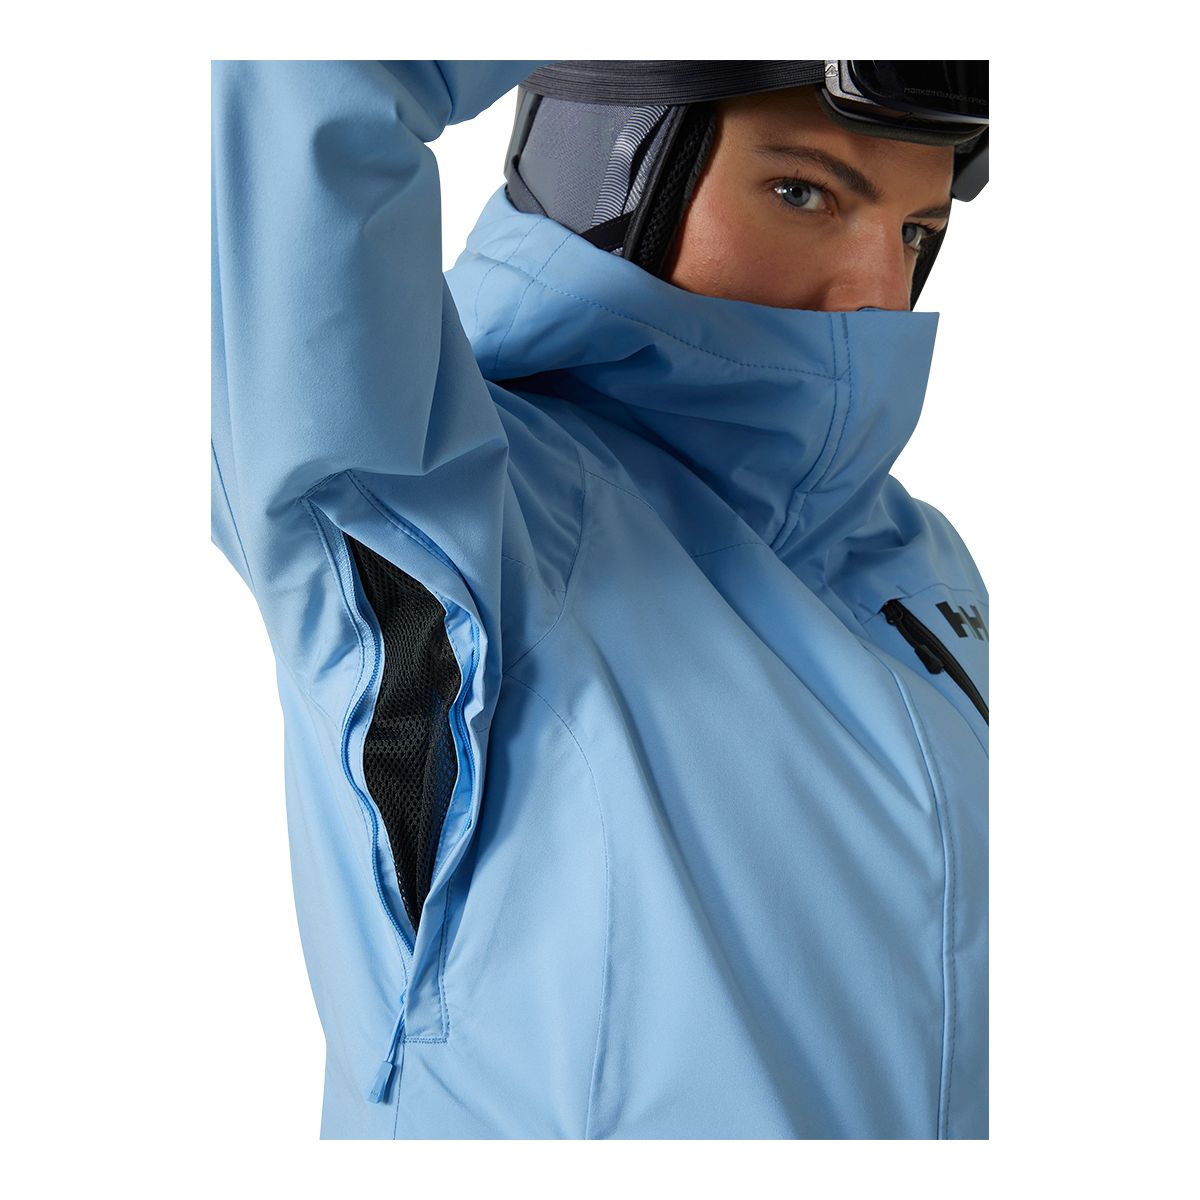 Harpily Women Fleece Jackets Coats Heated Outdoor Clothing for Riding Skiing Fishing Via Heated Coat Blue XL, Women's